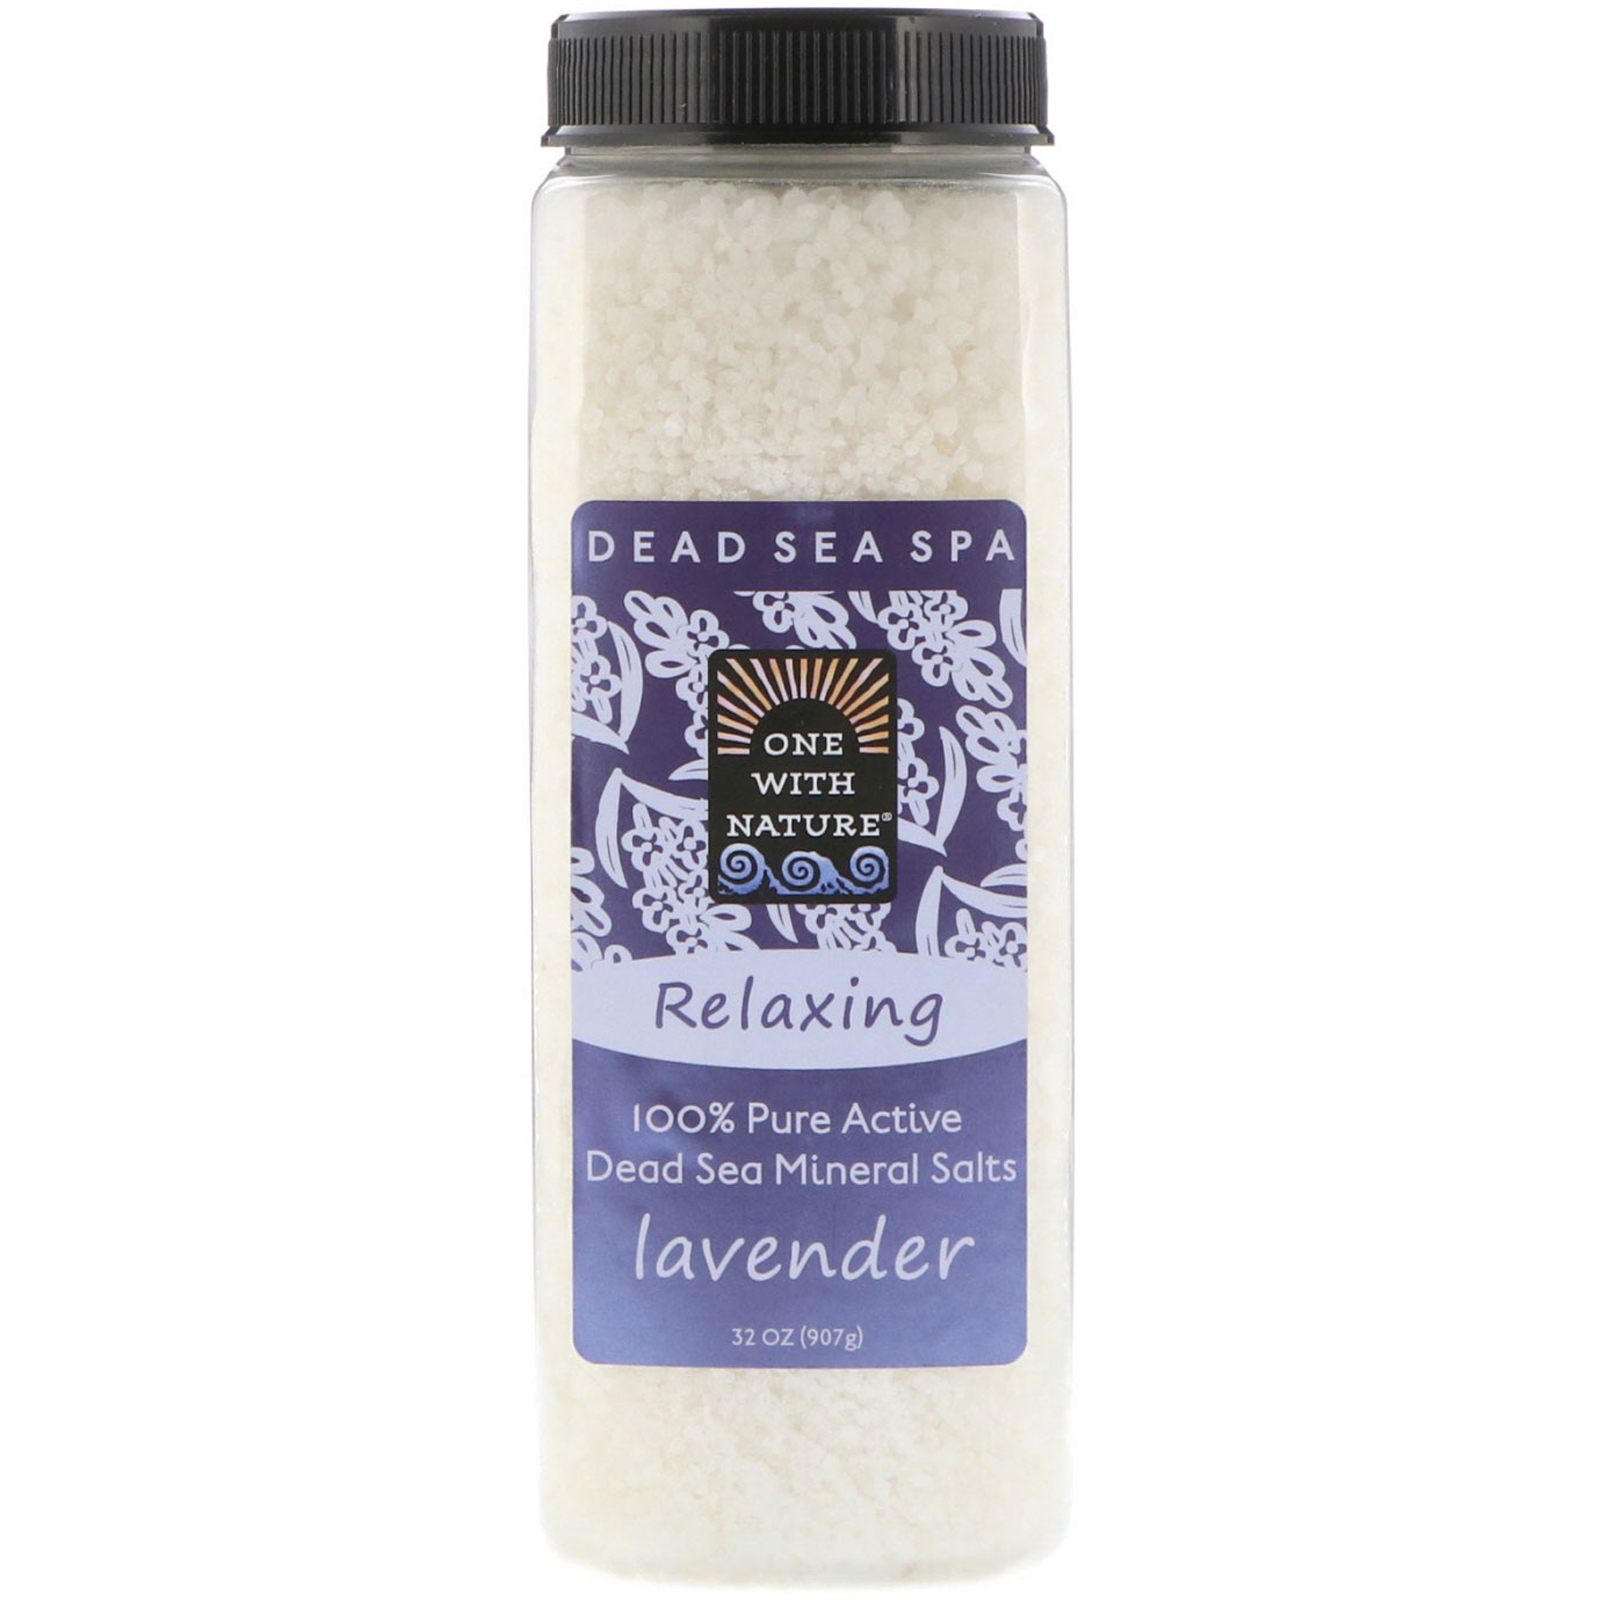 Natural mineral. Соль для ванн "Лаванда". Соль с лавандой. Соль мертвого моря для ванны (Лаванда). Мазь с запахом лаванды.